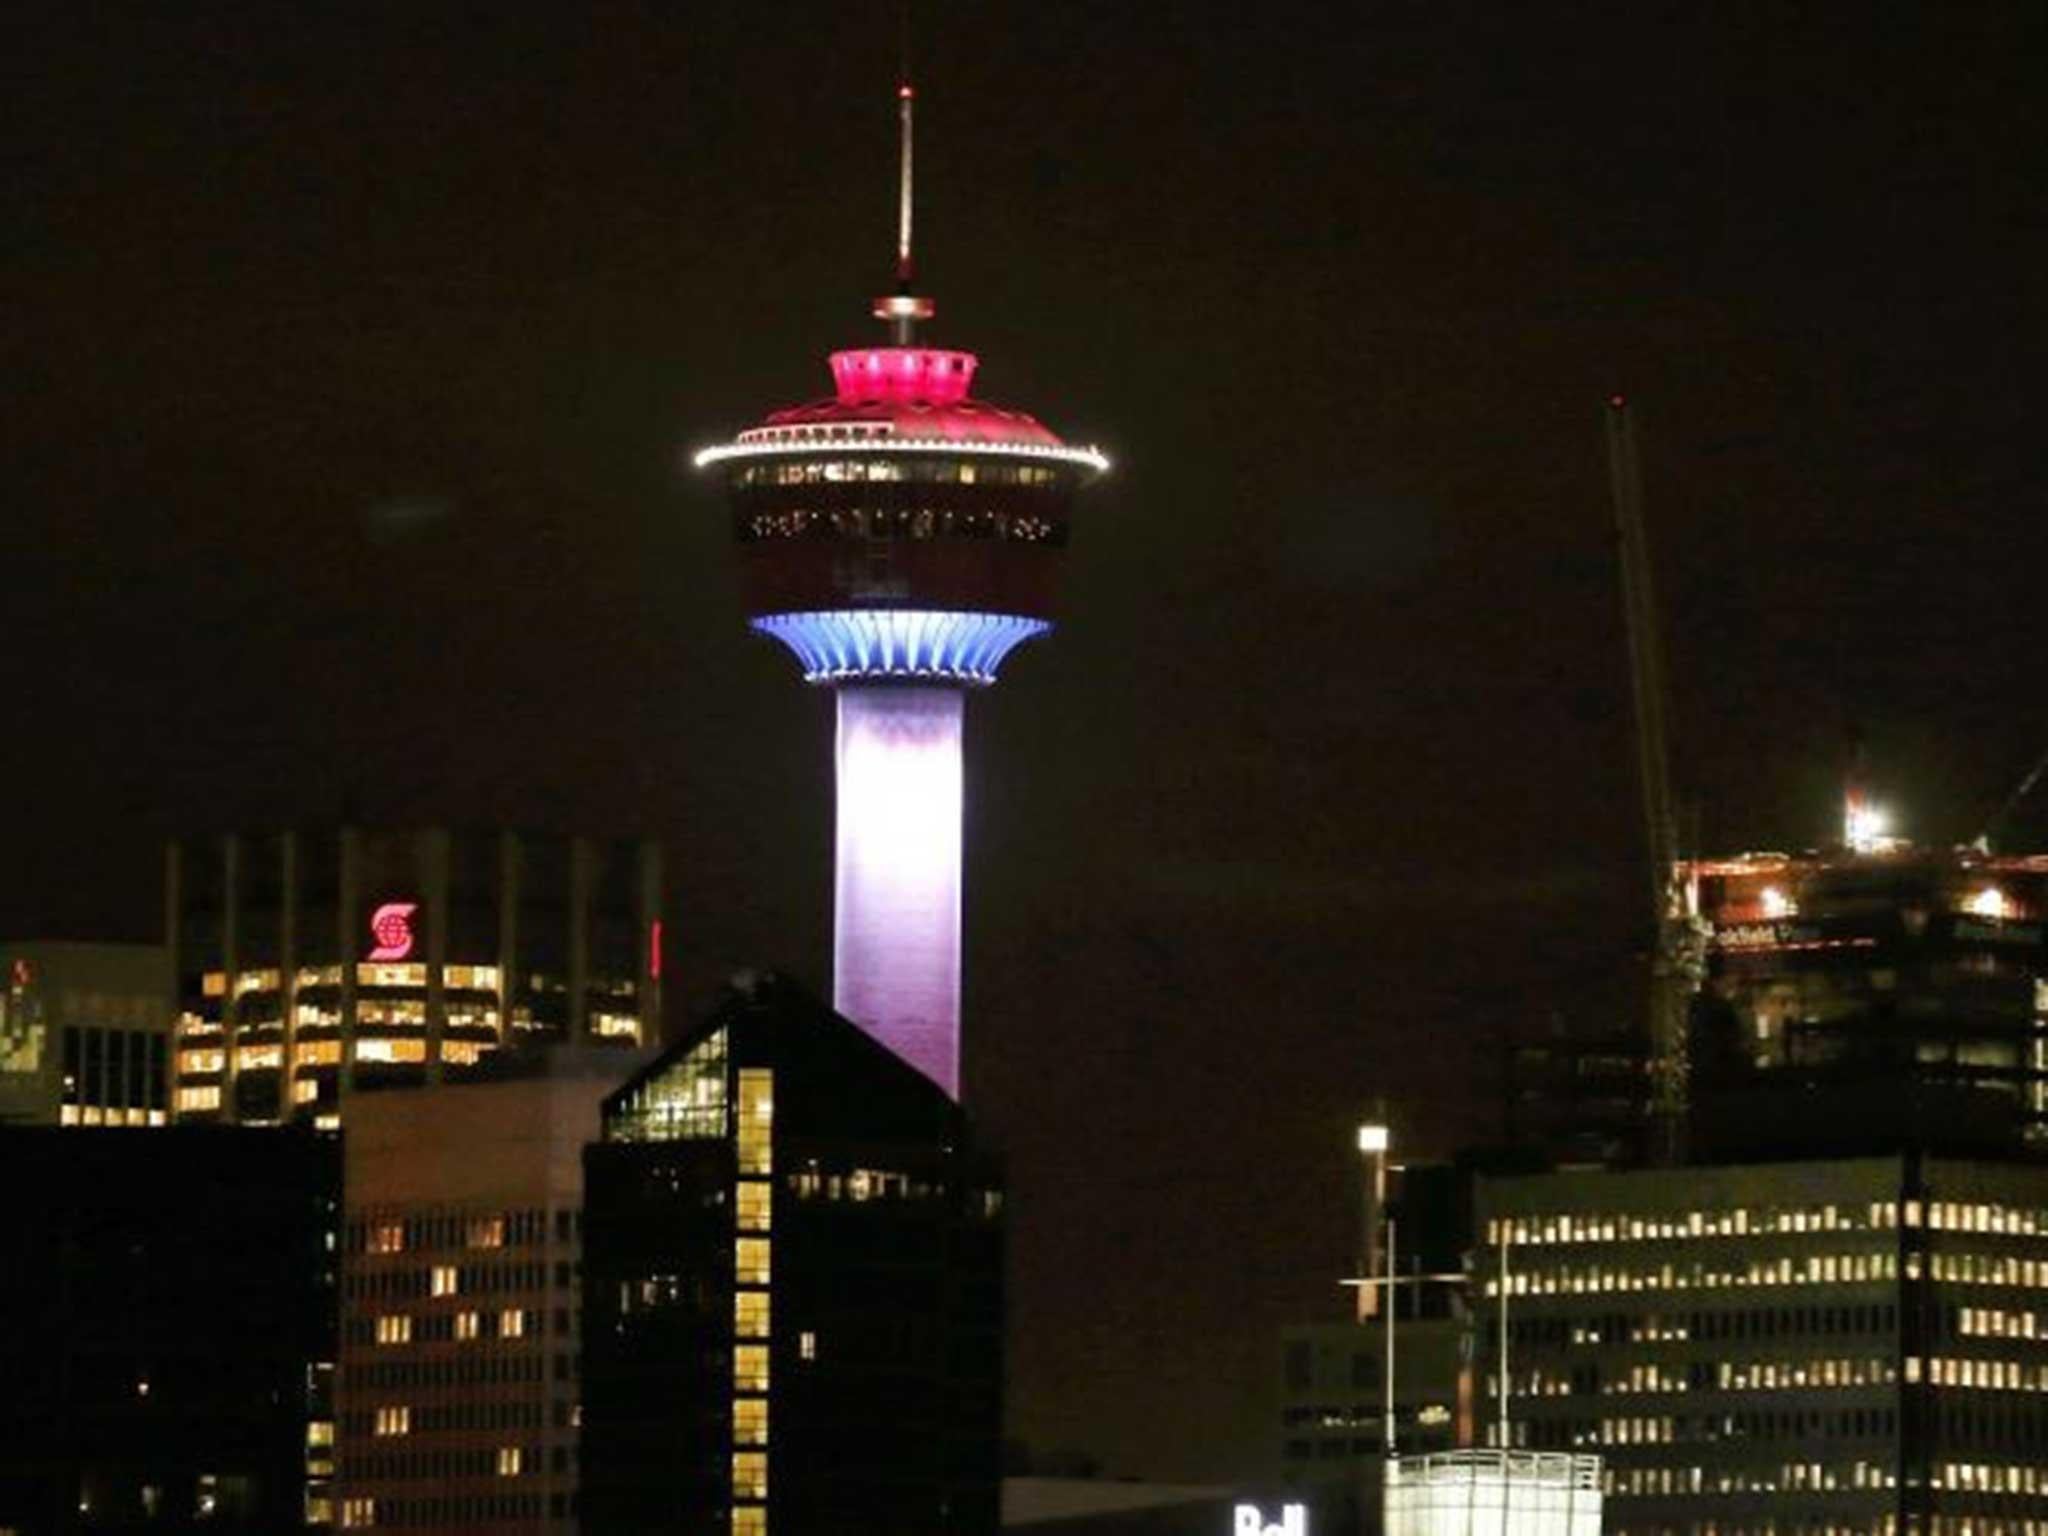 Calgary Tower offers unbeatable views